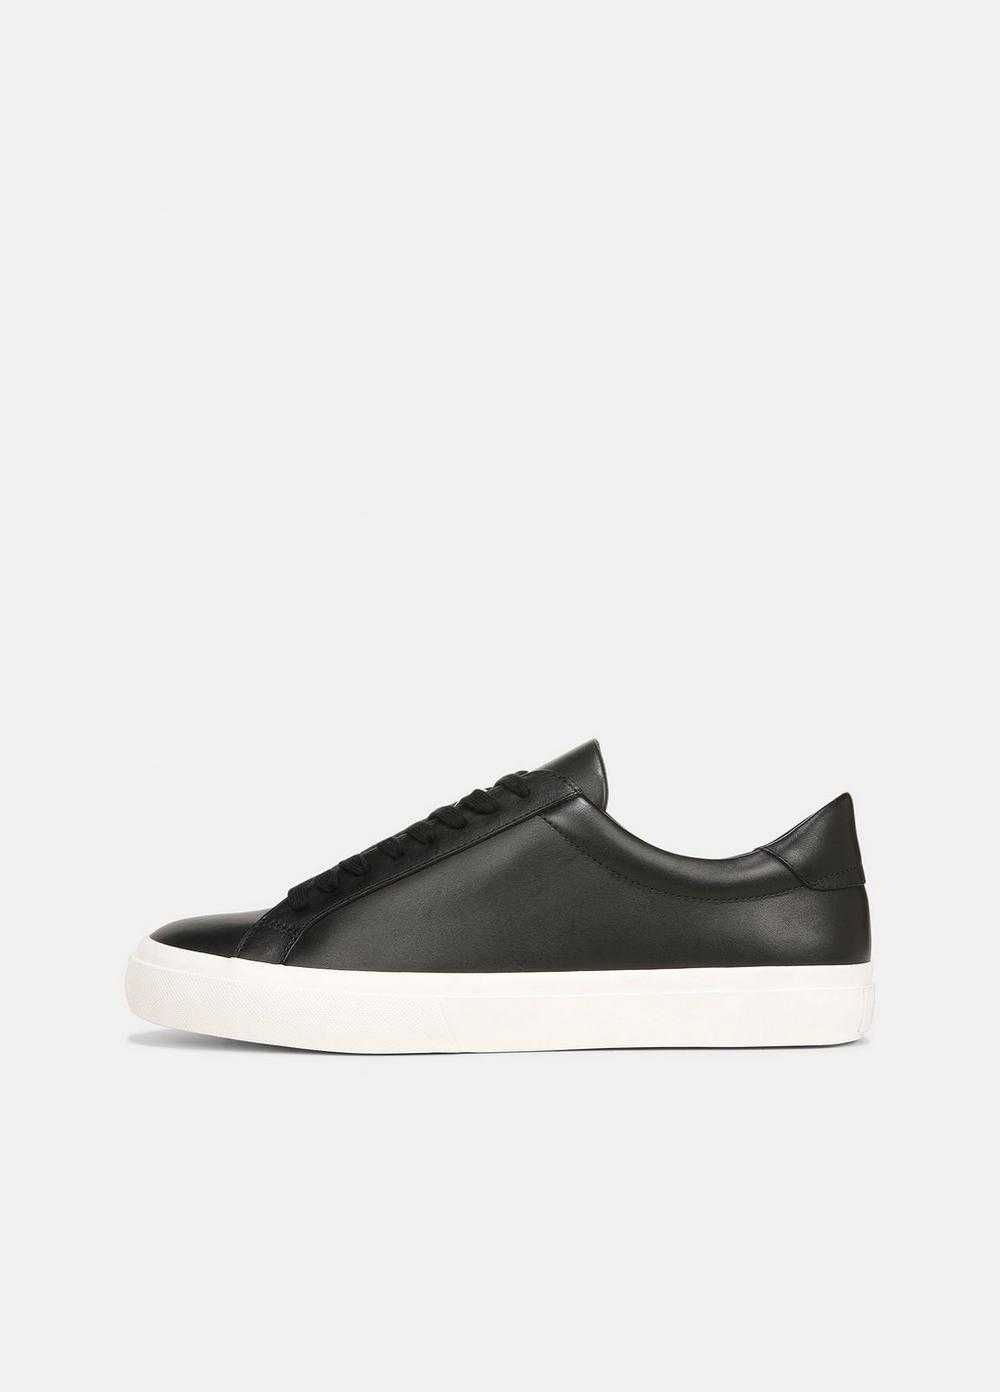 Fulton Leather Sneaker, Black, Size 11.5 Vince